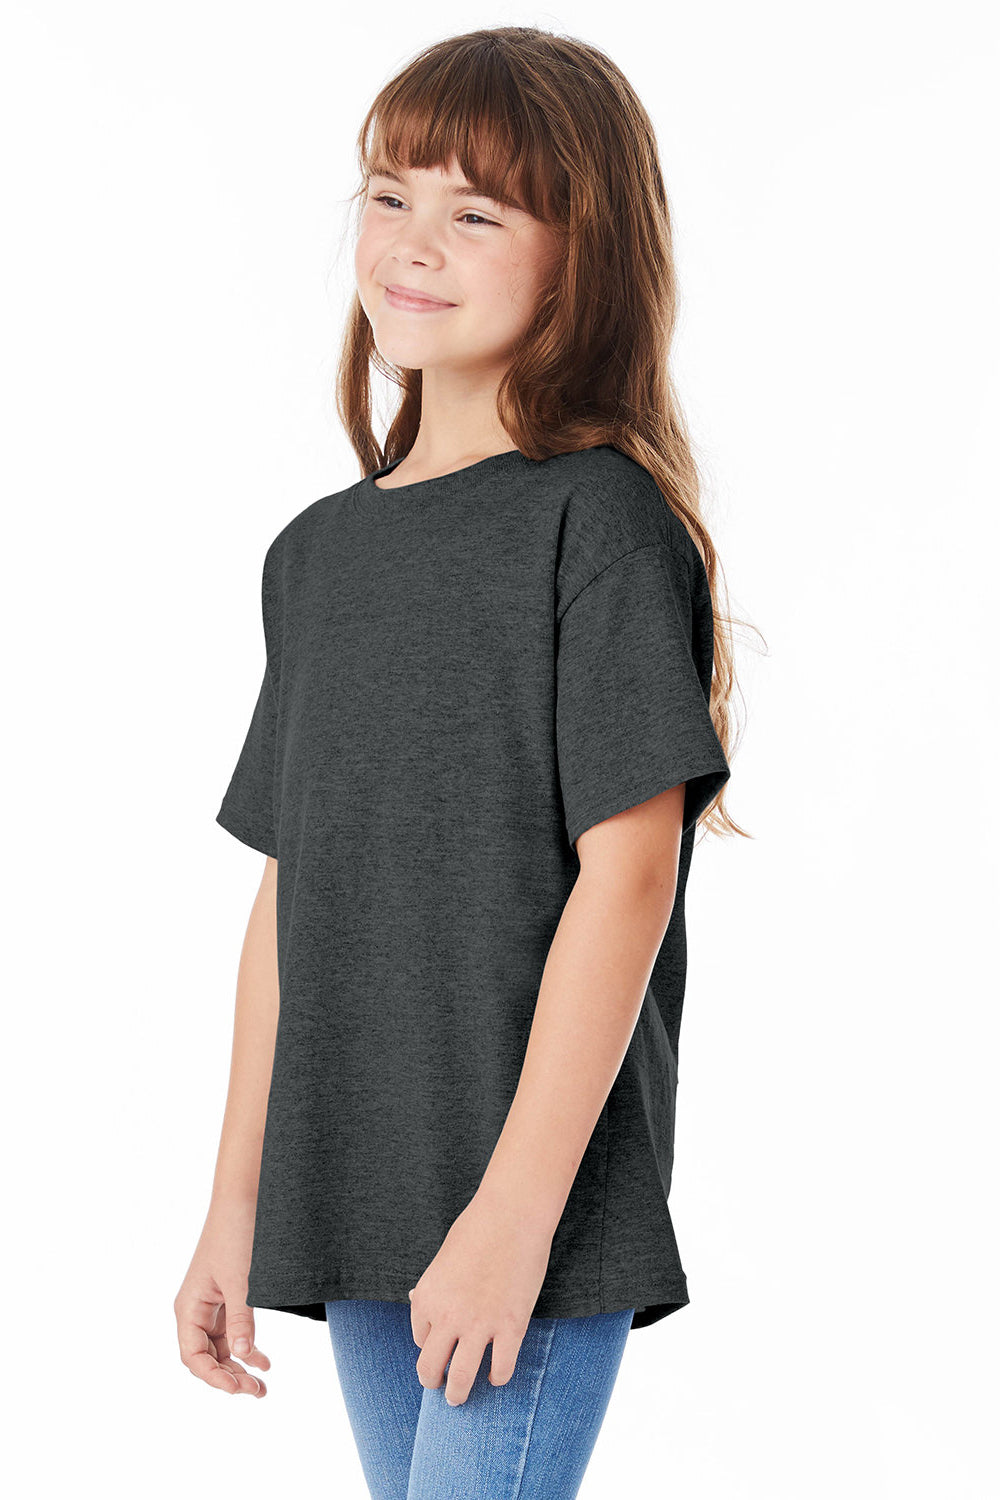 Hanes 5480 Youth ComfortSoft Short Sleeve Crewneck T-Shirt Heather Charcoal Grey 3Q